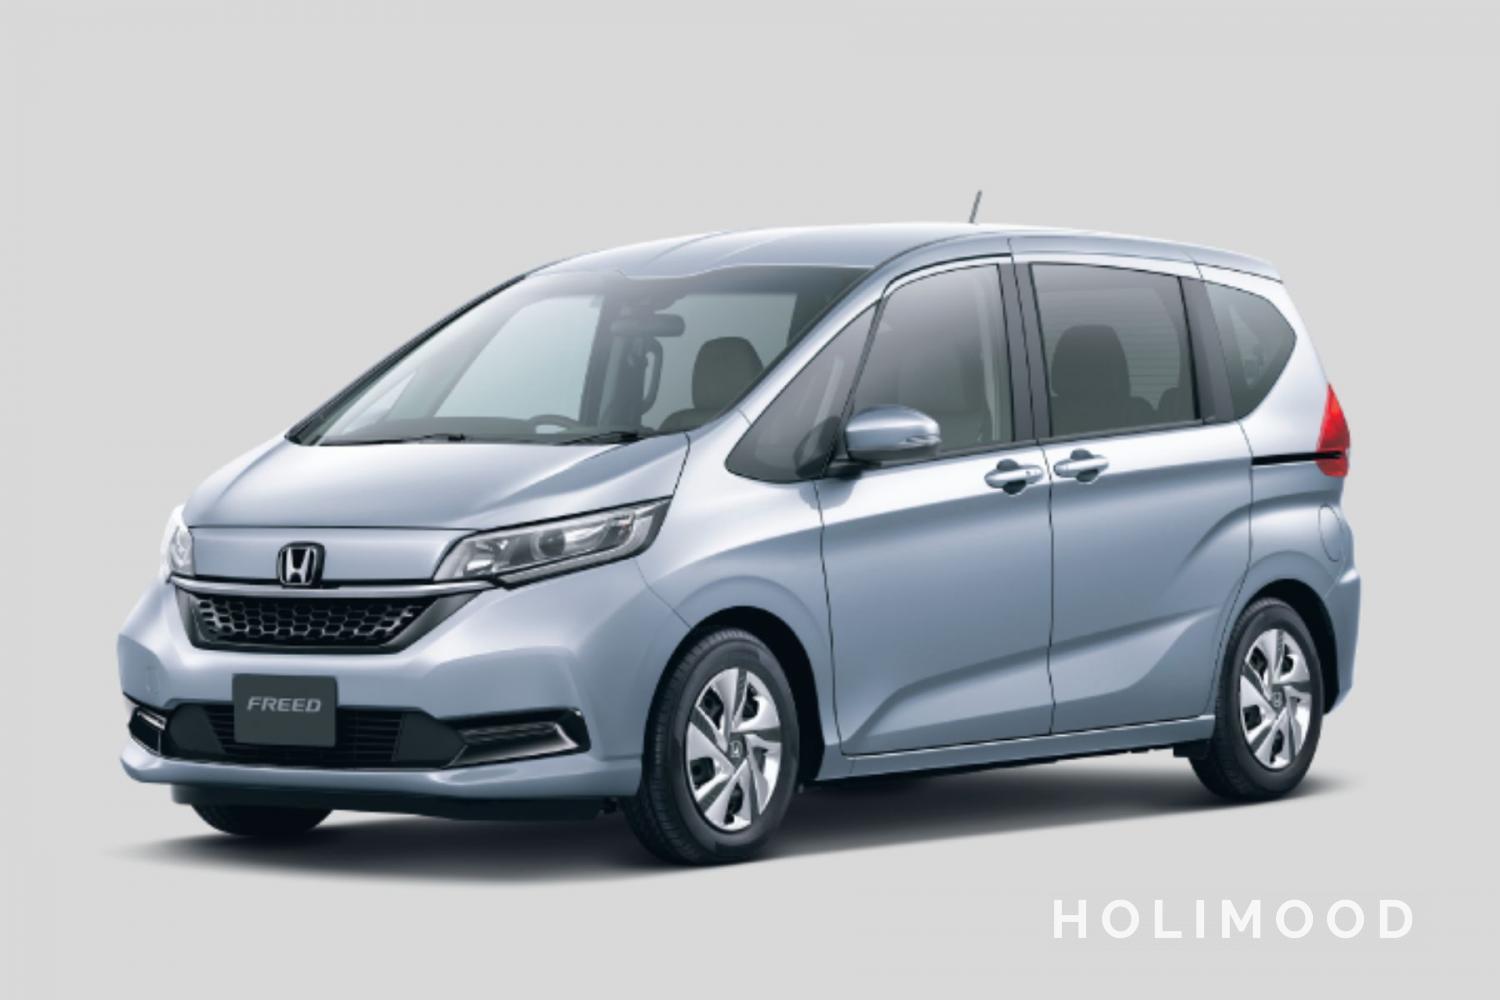 DCH Mobility Car Rent x Holimood Promotion 【熱門家庭車之選】【五年內新車】Honda Freed - 實用便利7人車 (月租) 1